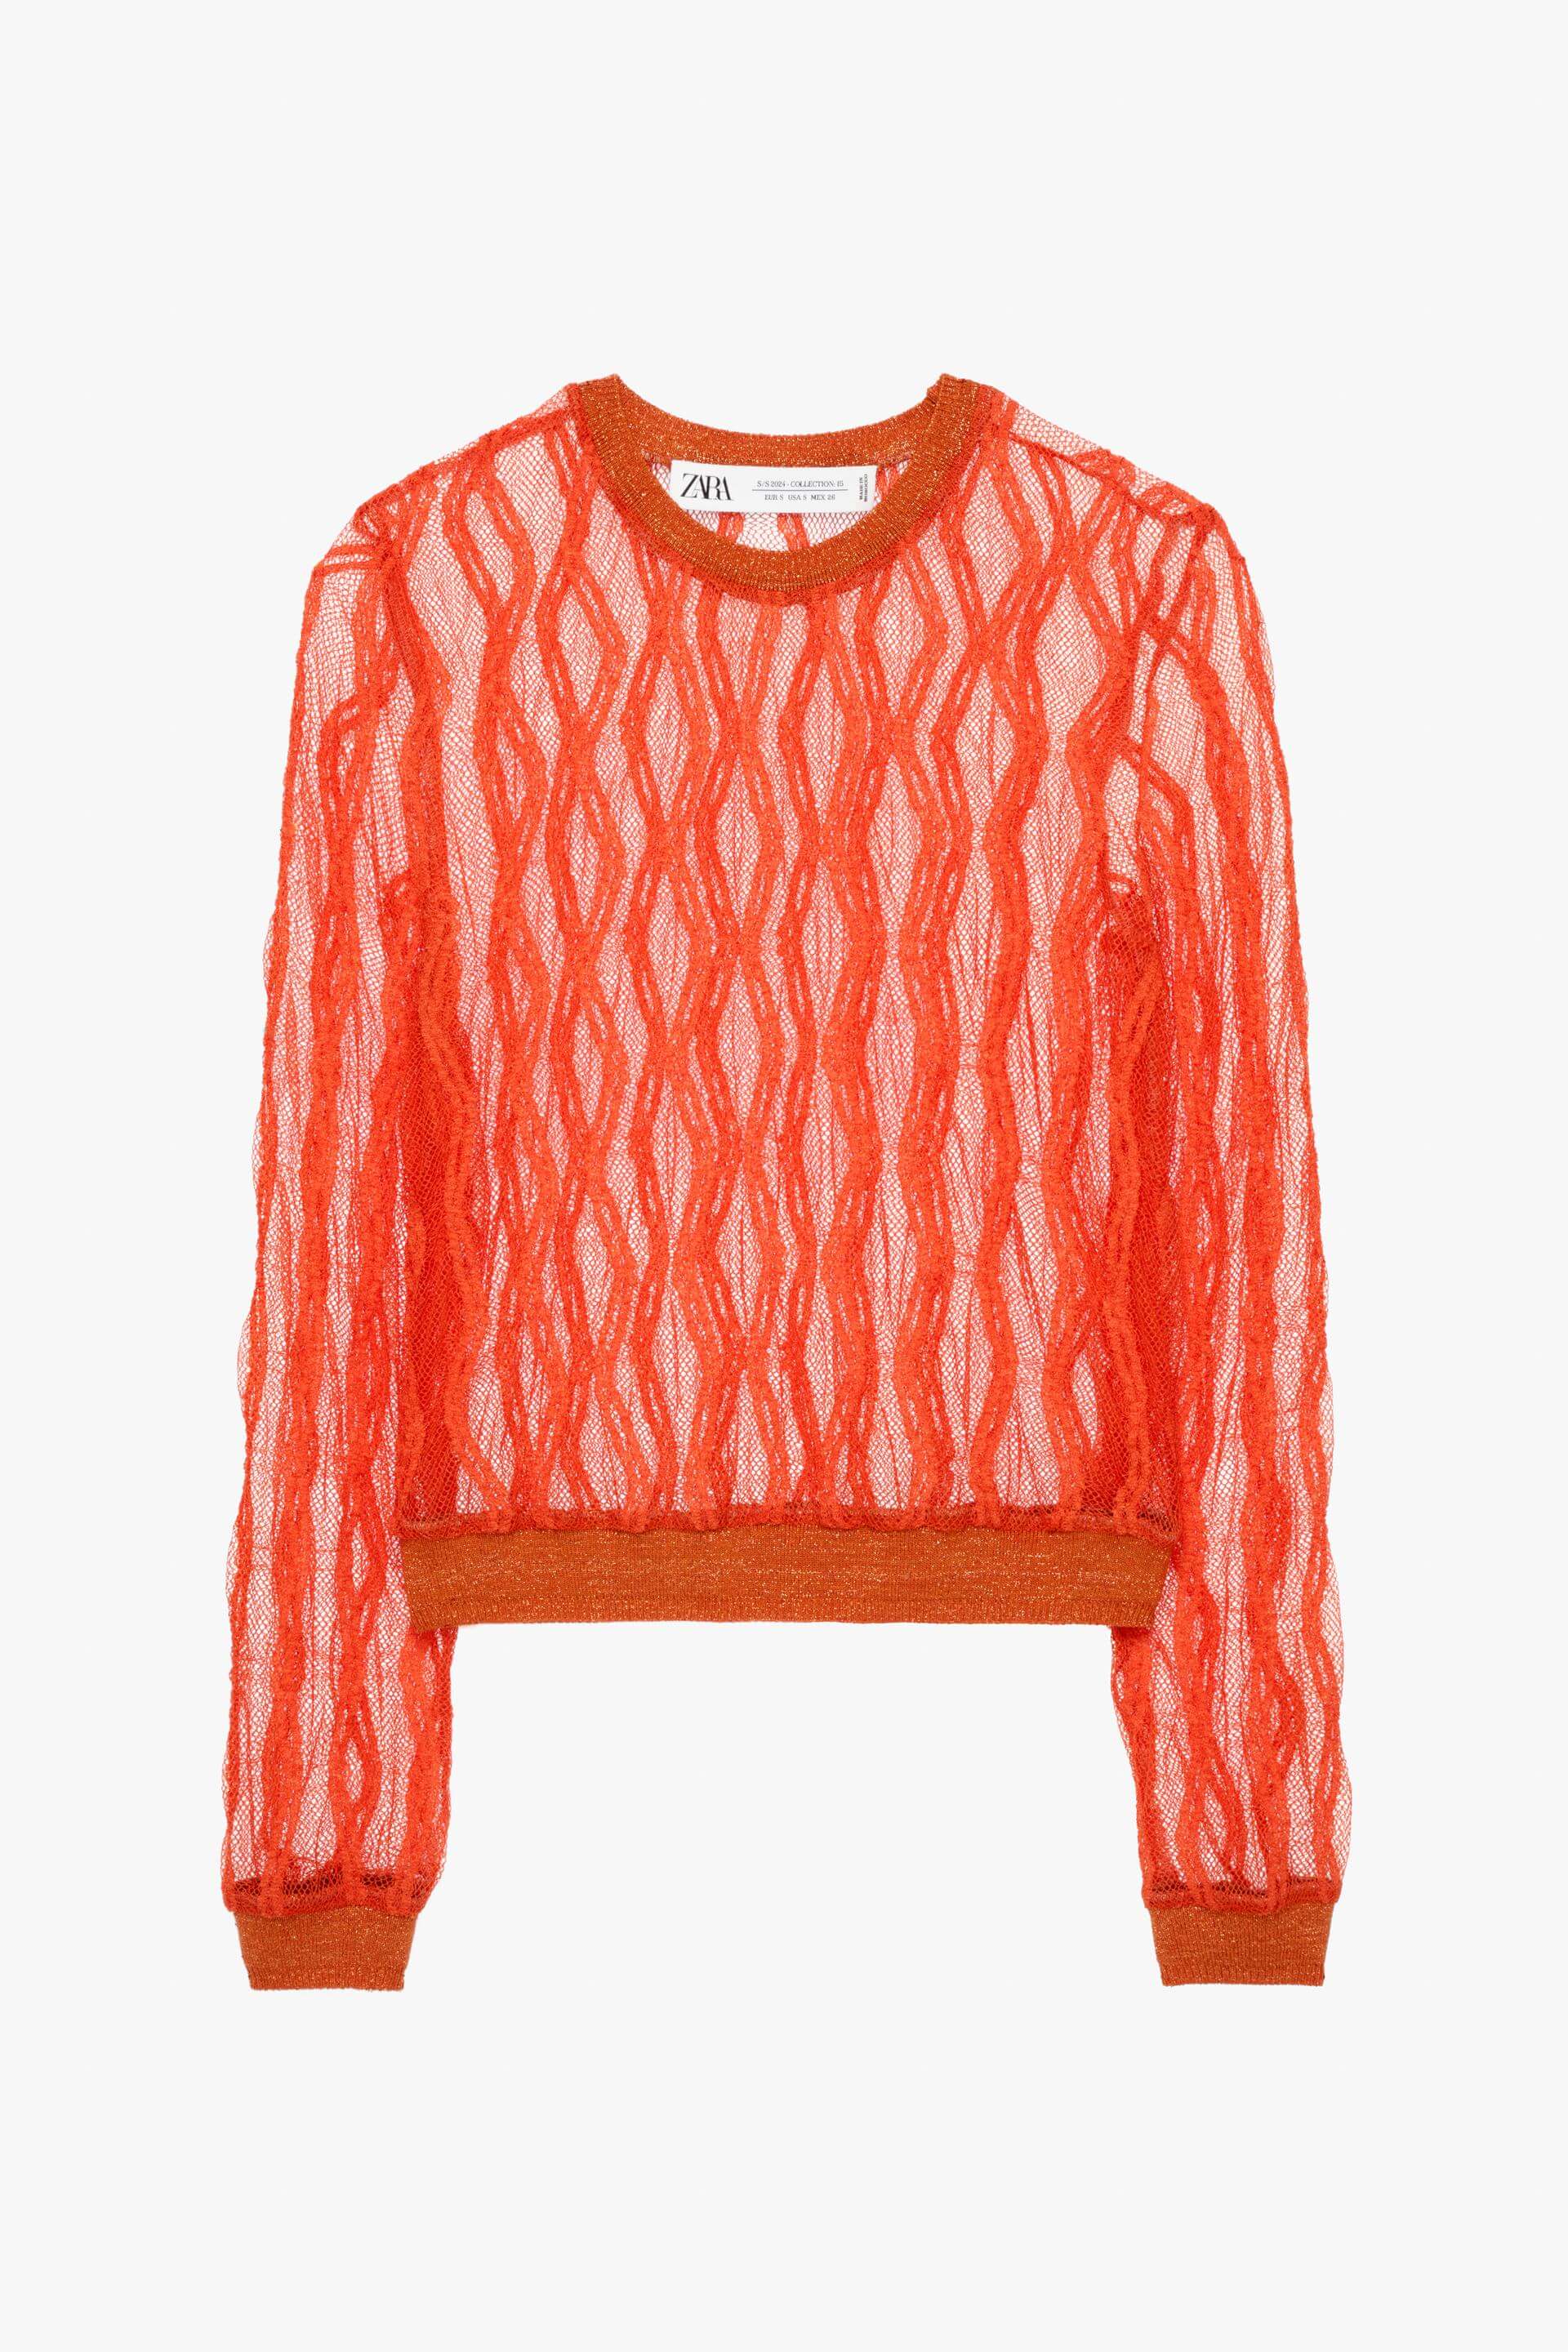 Топ Zara Knit - Limited Edition, оранжевый футболка поло zara crochet knit limited edition темно бежевый